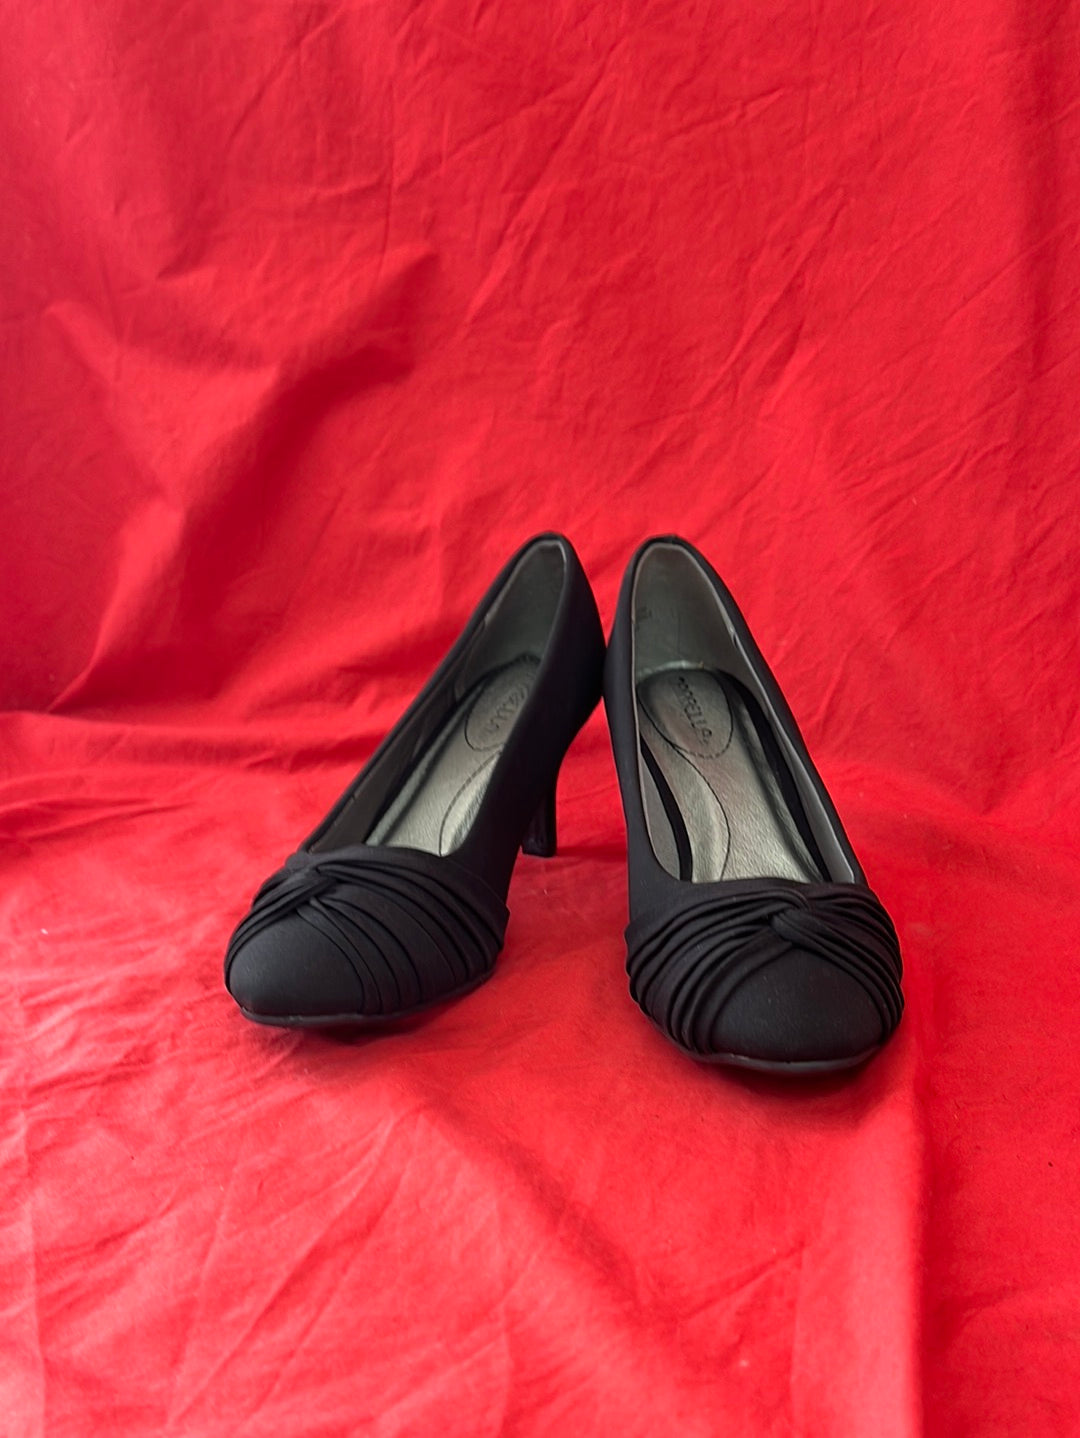 MARBELLA Black Faux Suede Dressy Heel -- Size 9